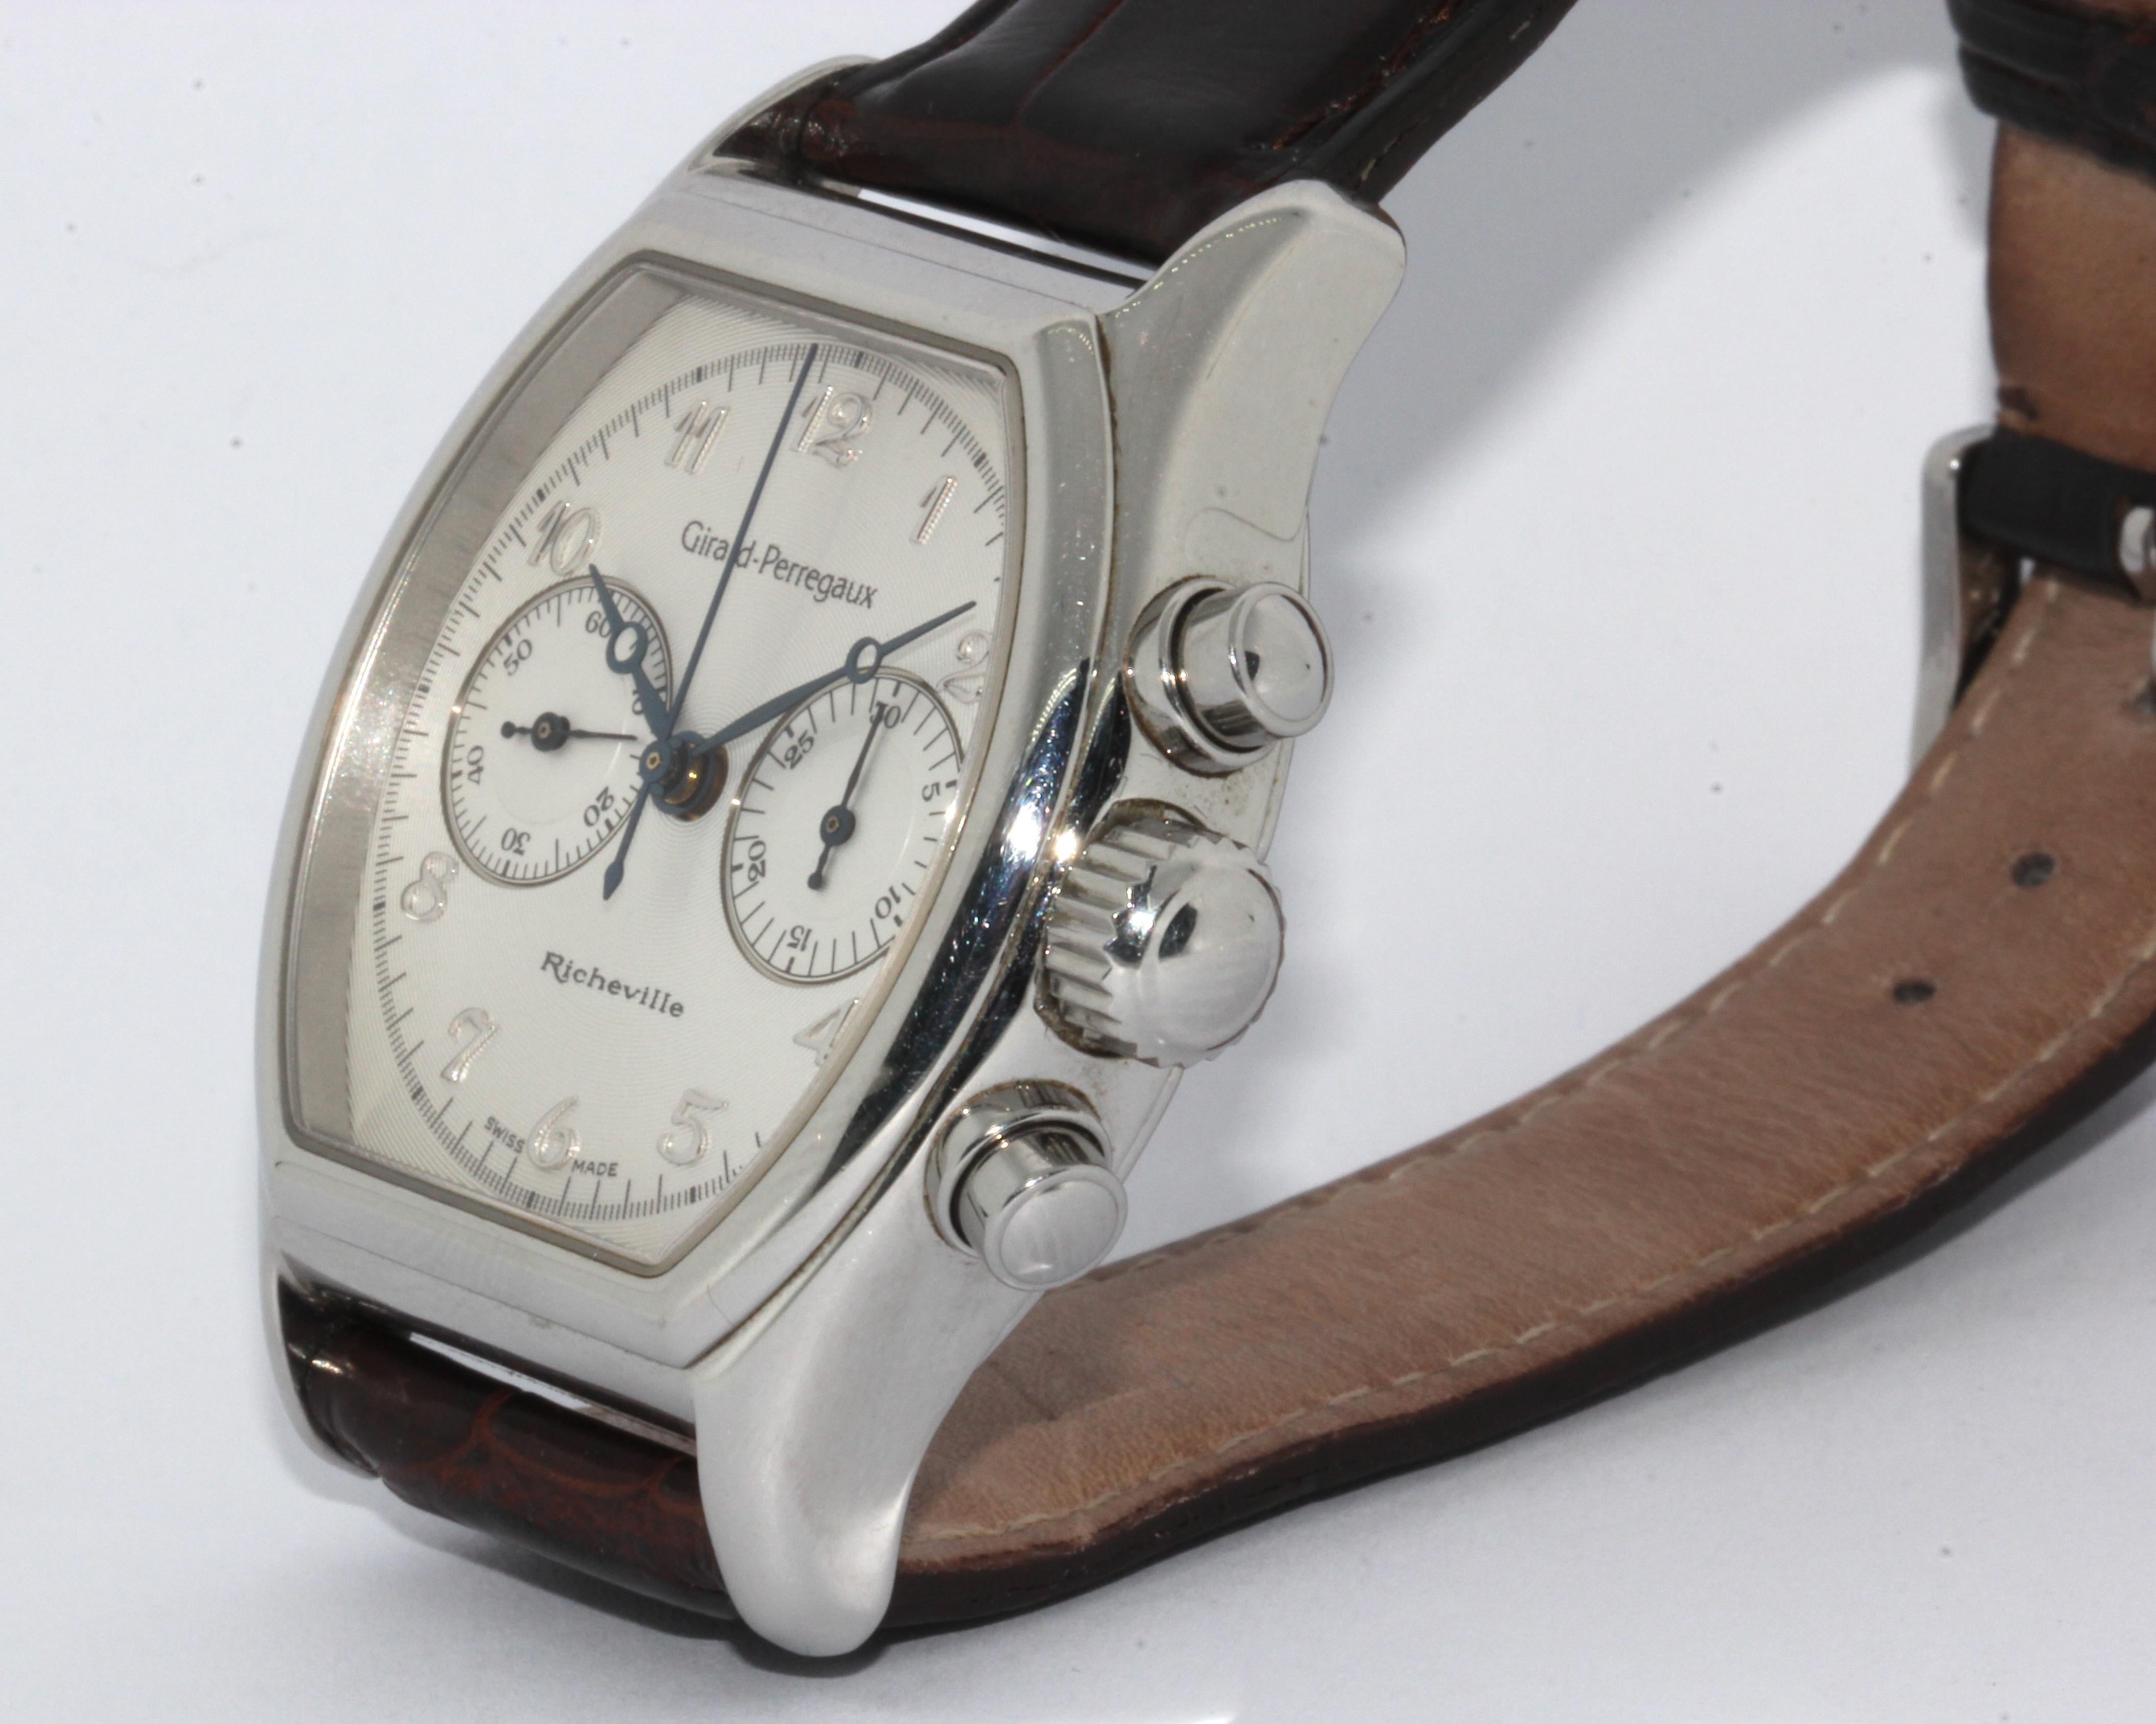 girard-perregaux richeville chronograph